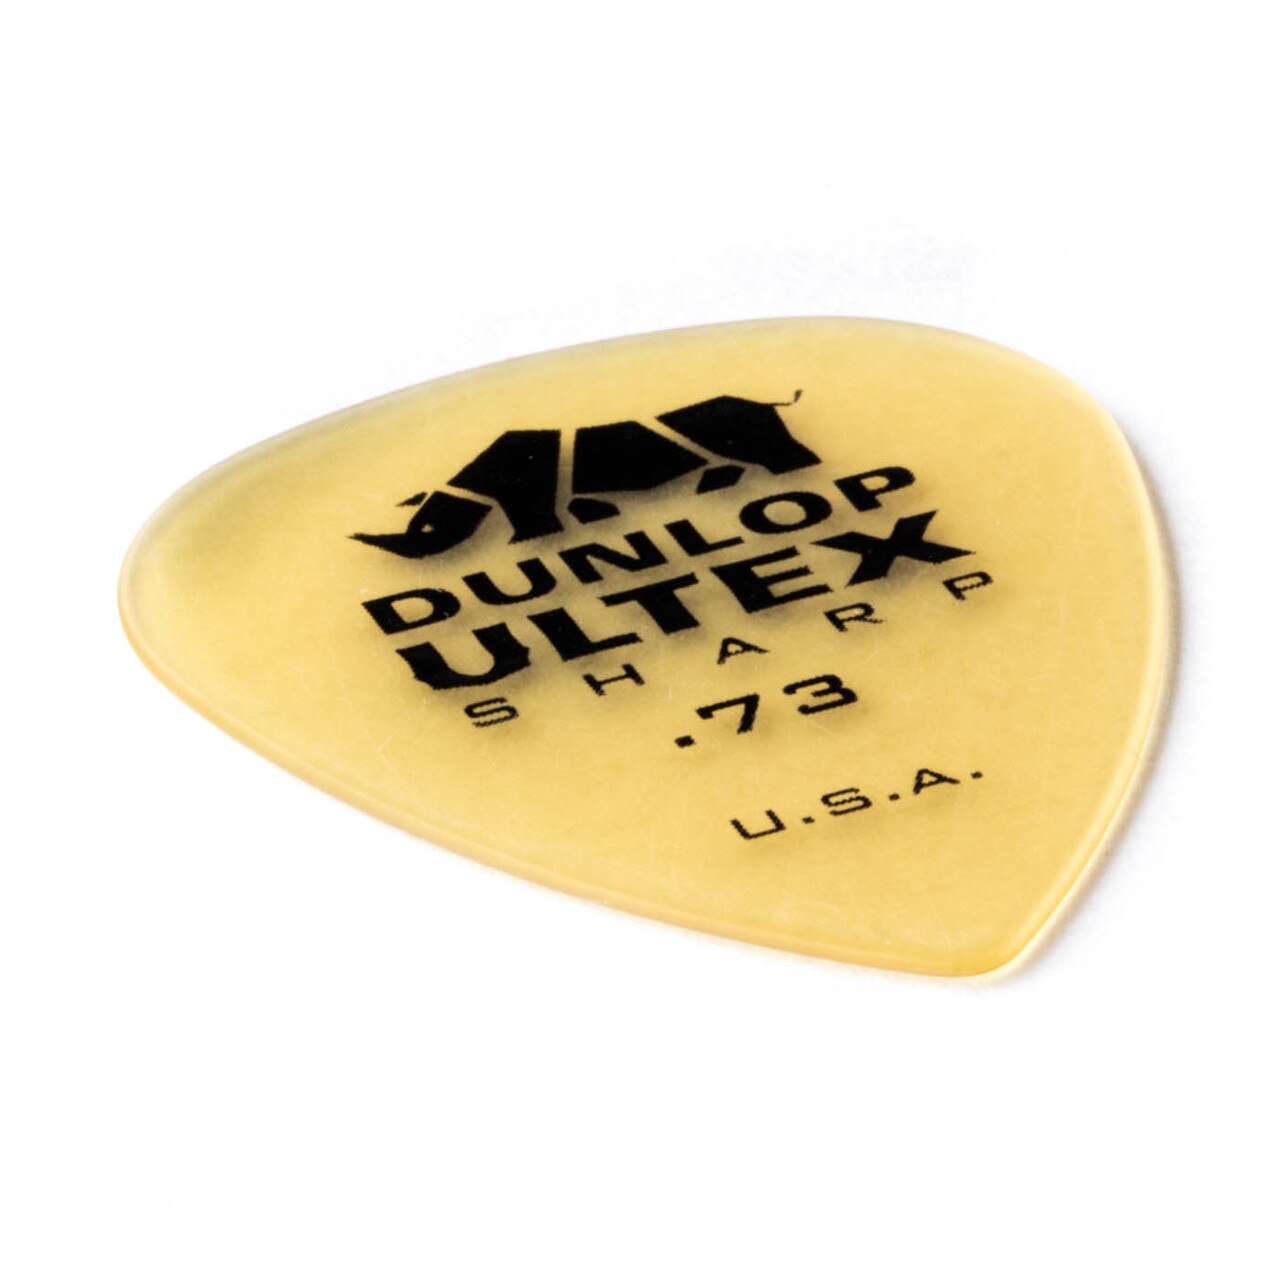 Jim Dunlop Ultex Sharp 433 0.73mm - Plektren - Variation 1